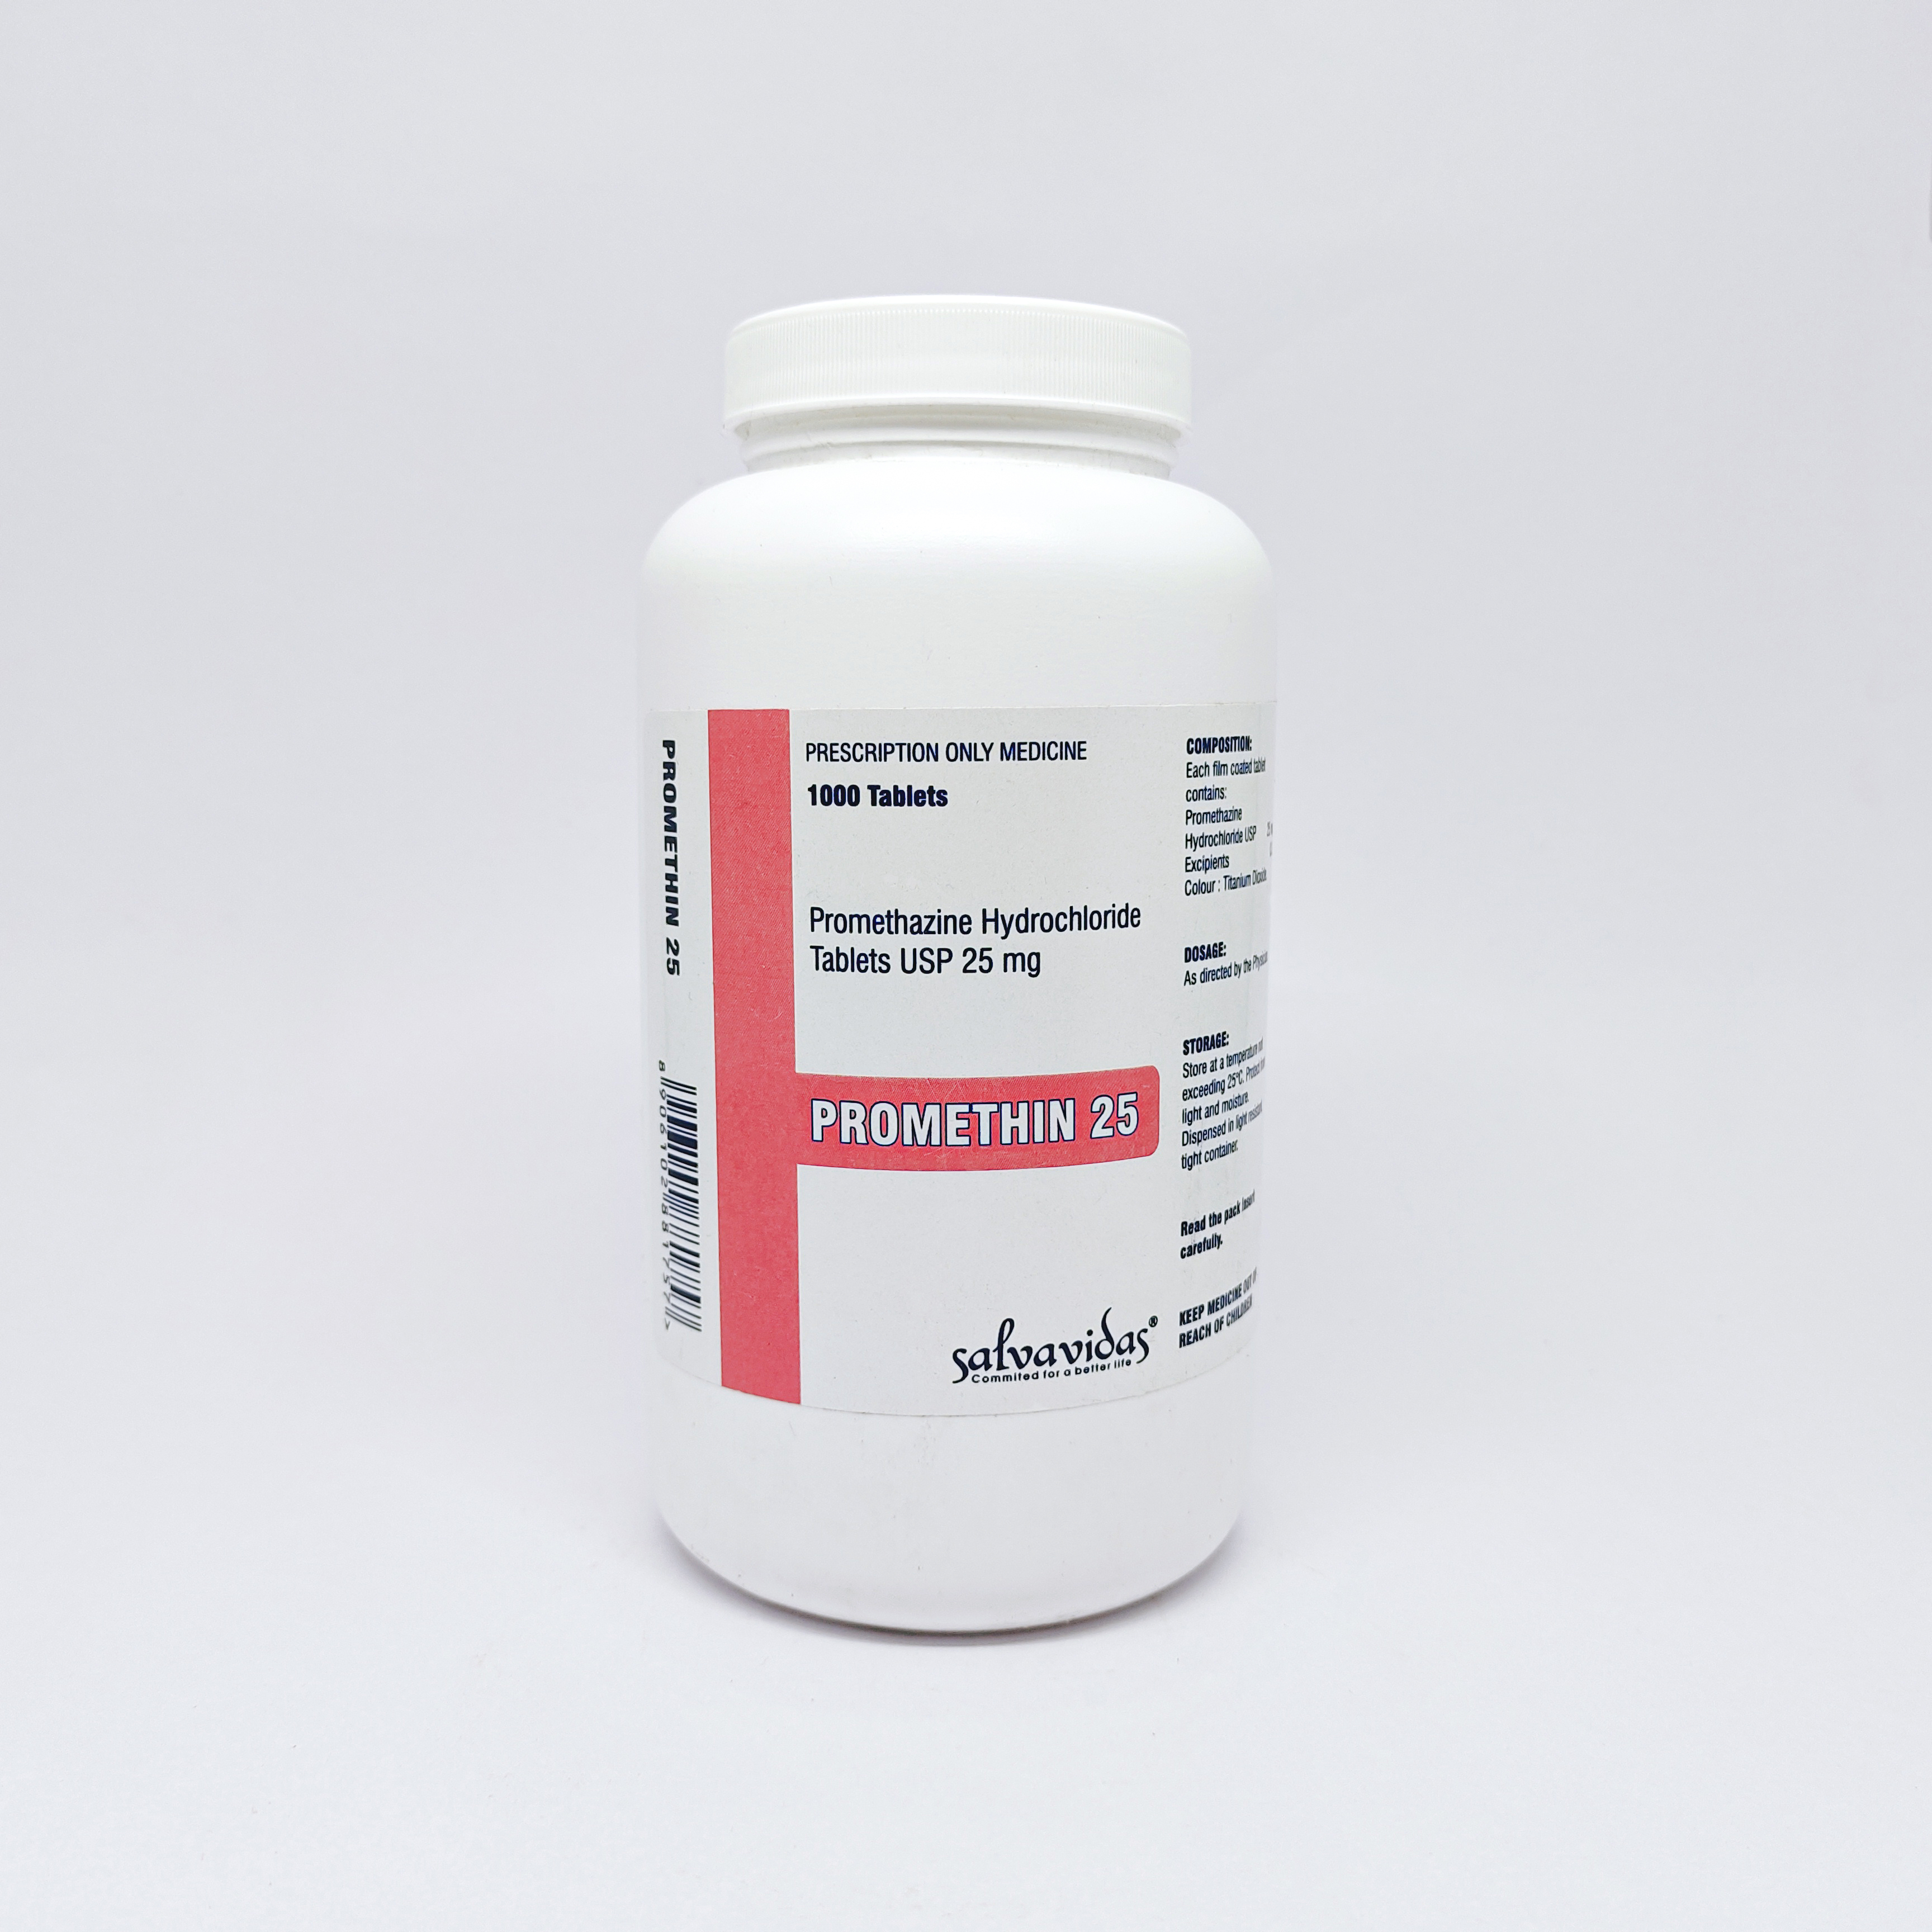 Promethazine Hydrochloride Tablets